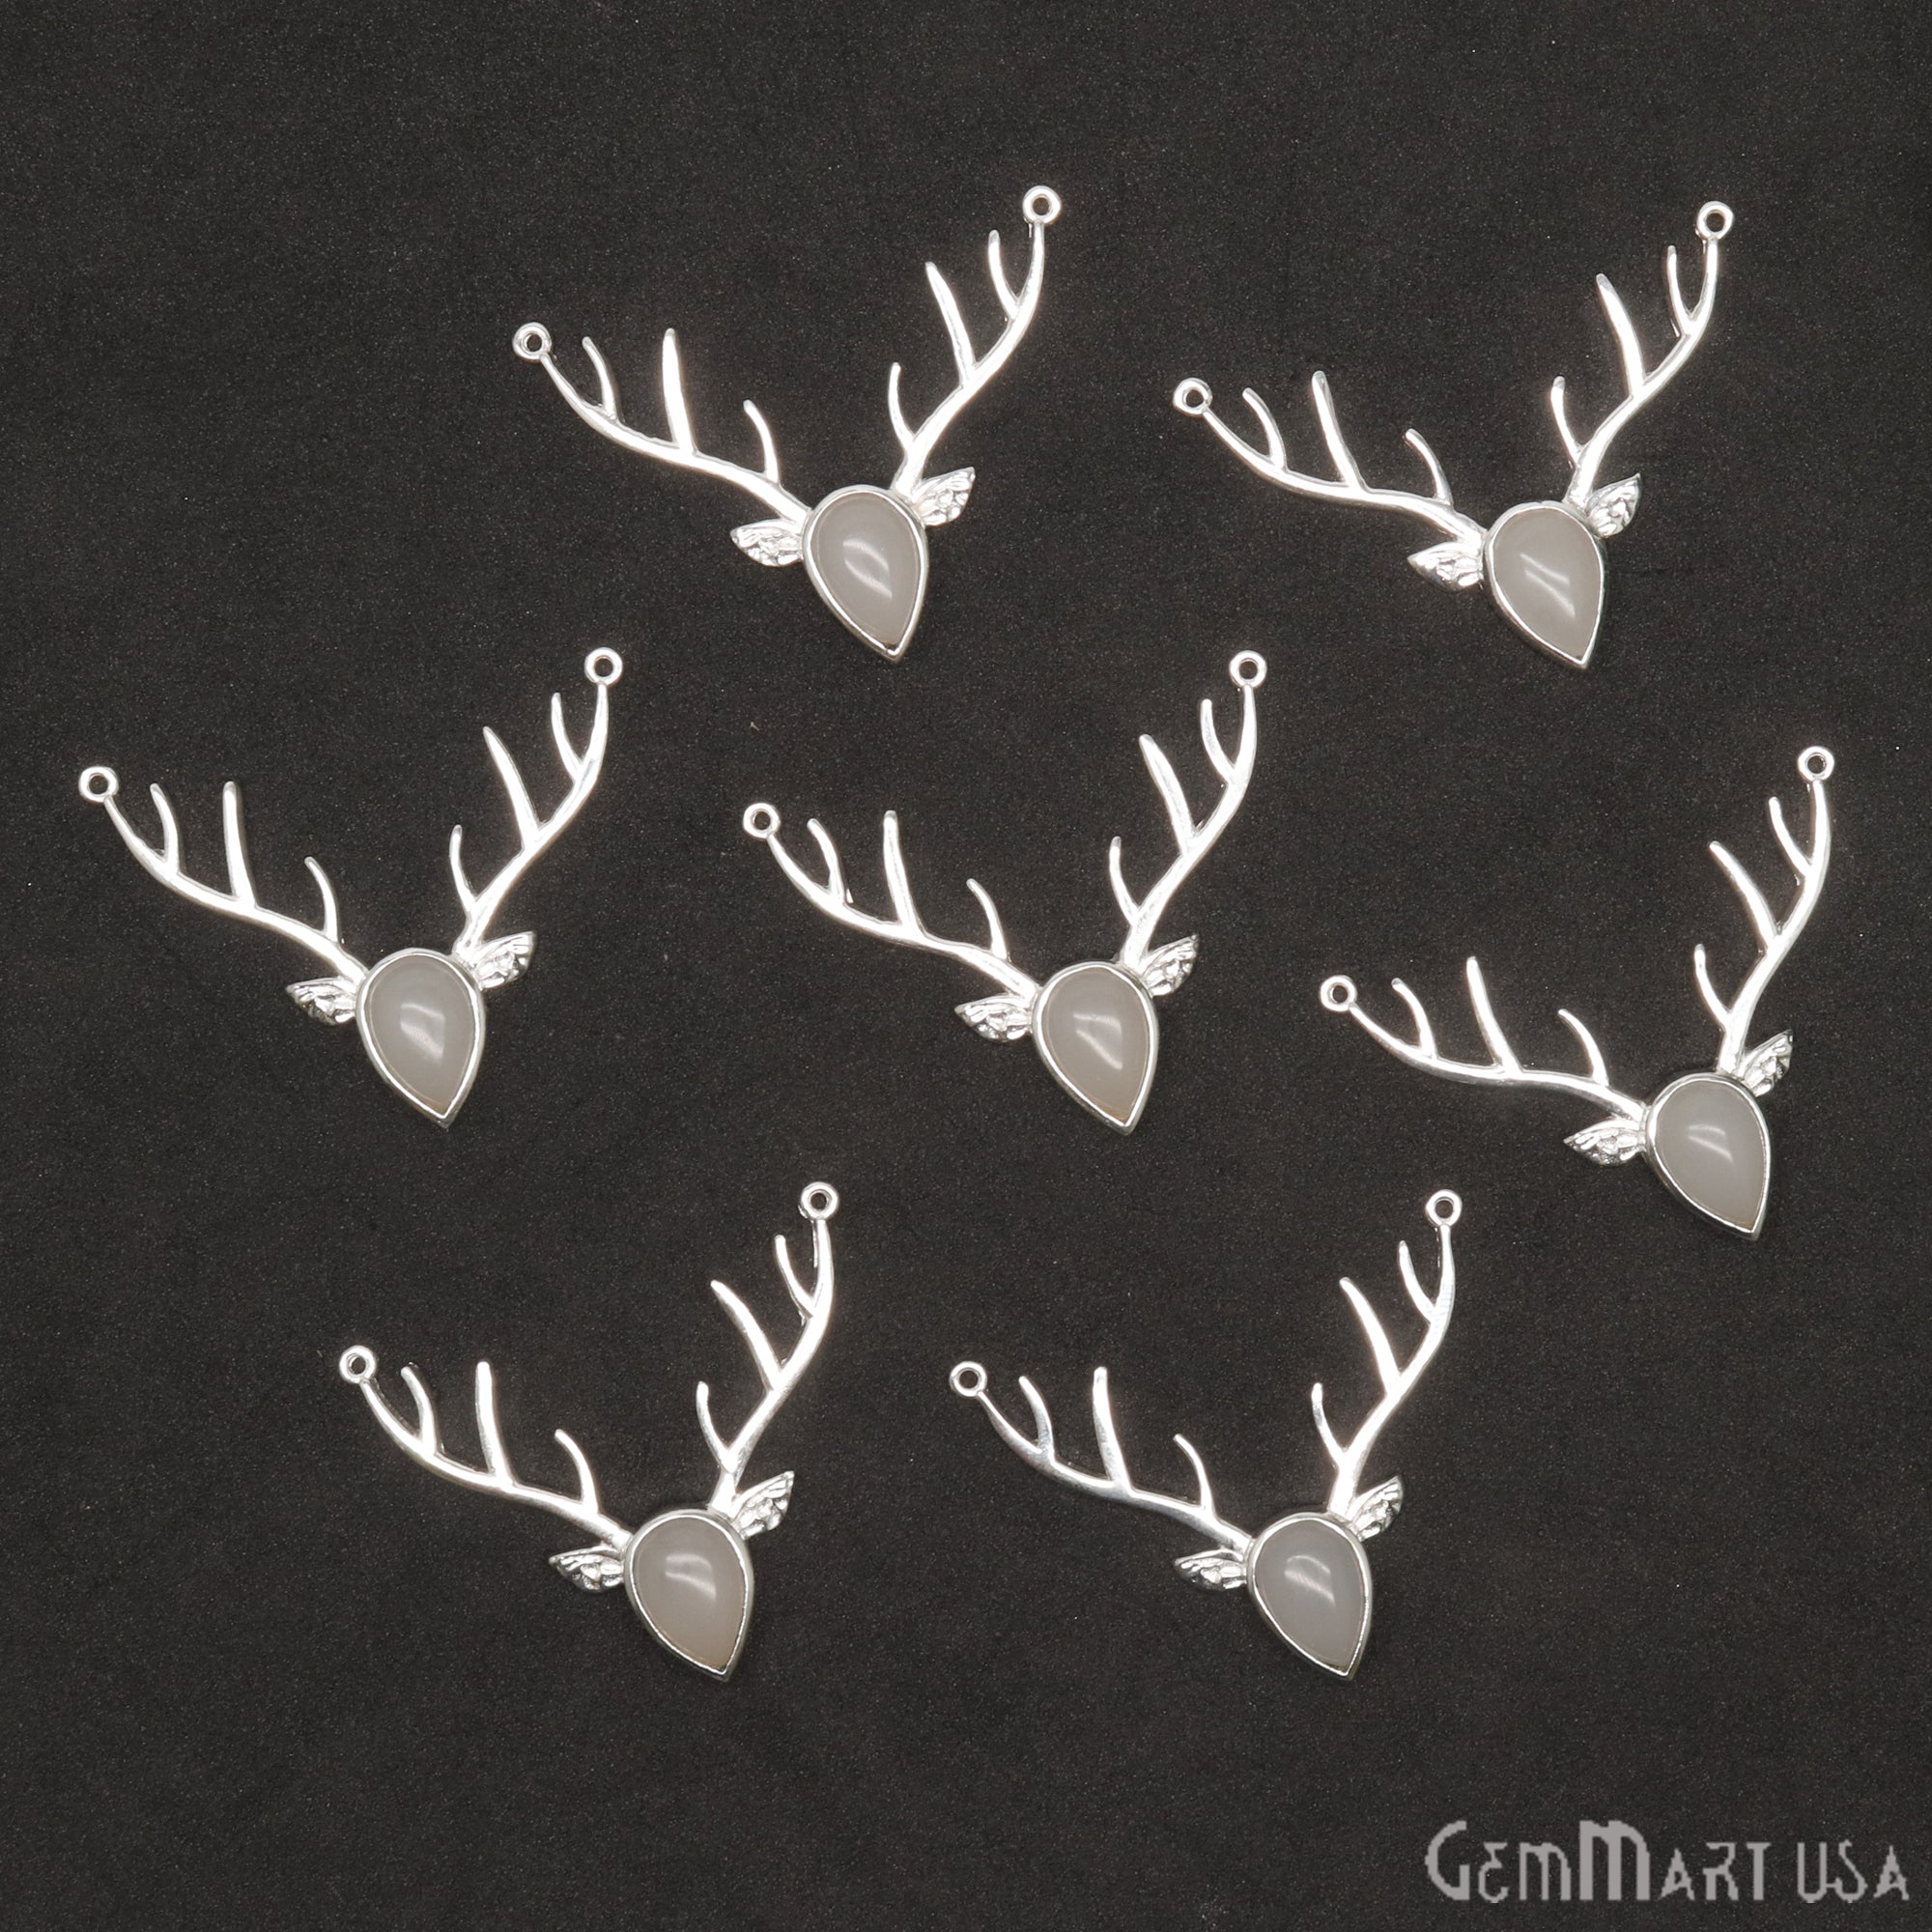 Reindeer Horn 42x14mm Gemstone Necklace Pendant